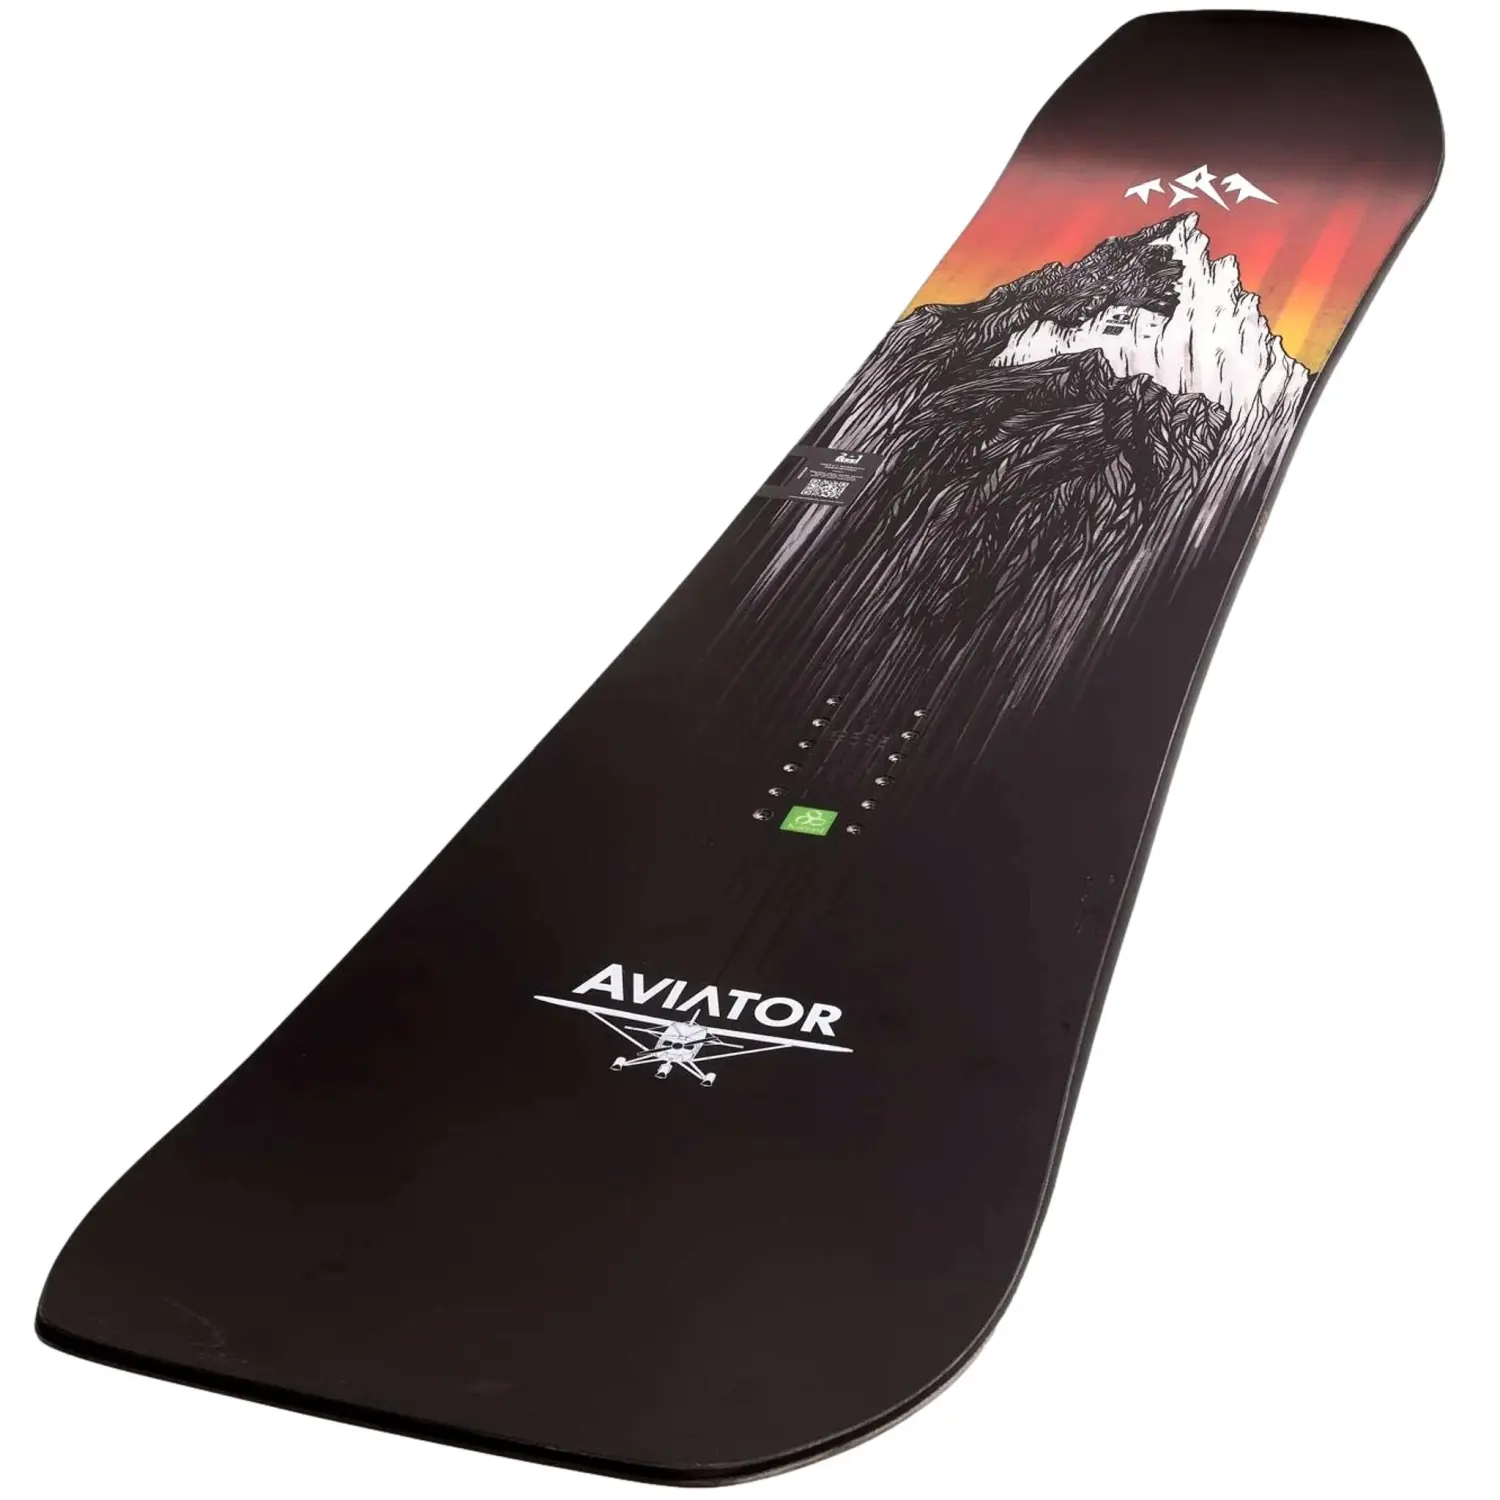 Jones Bag DSCNT Black 25lt - Zaino Snowboard Freeride - Mud and Snow